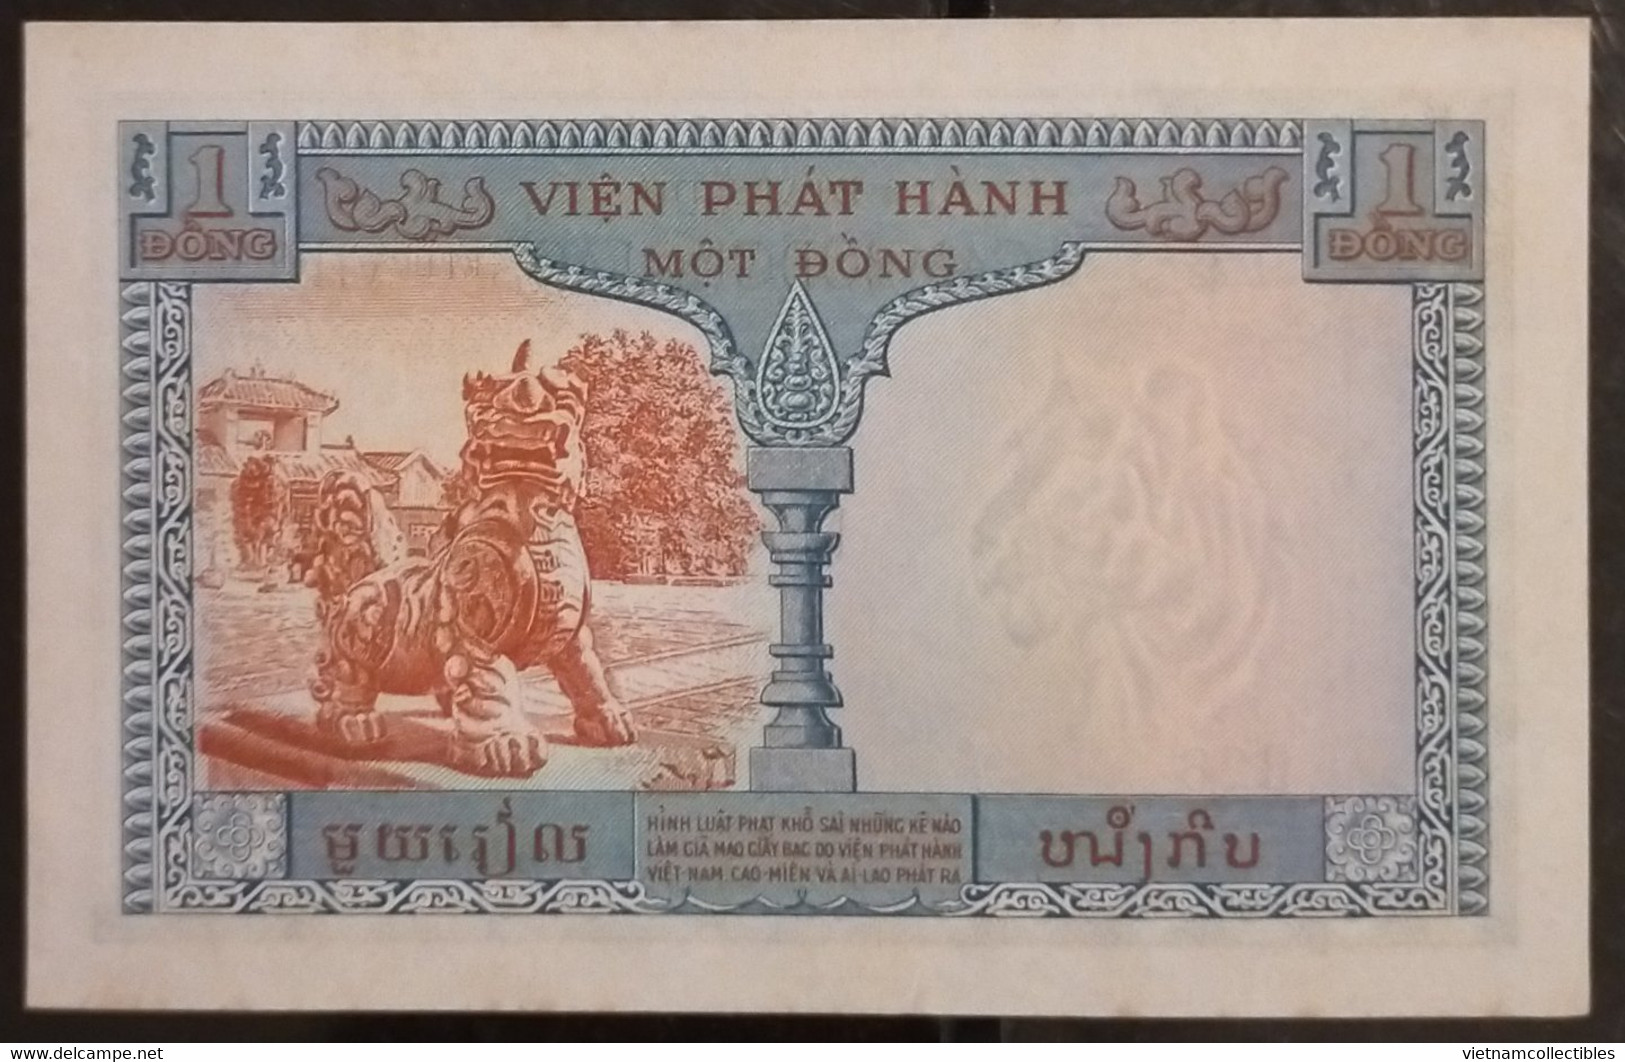 Indochine Indochina Vietnam Viet Nam Laos Cambodia 1 Piastre UNC Banknote Note 1954 - Pick # 105 - Indochine